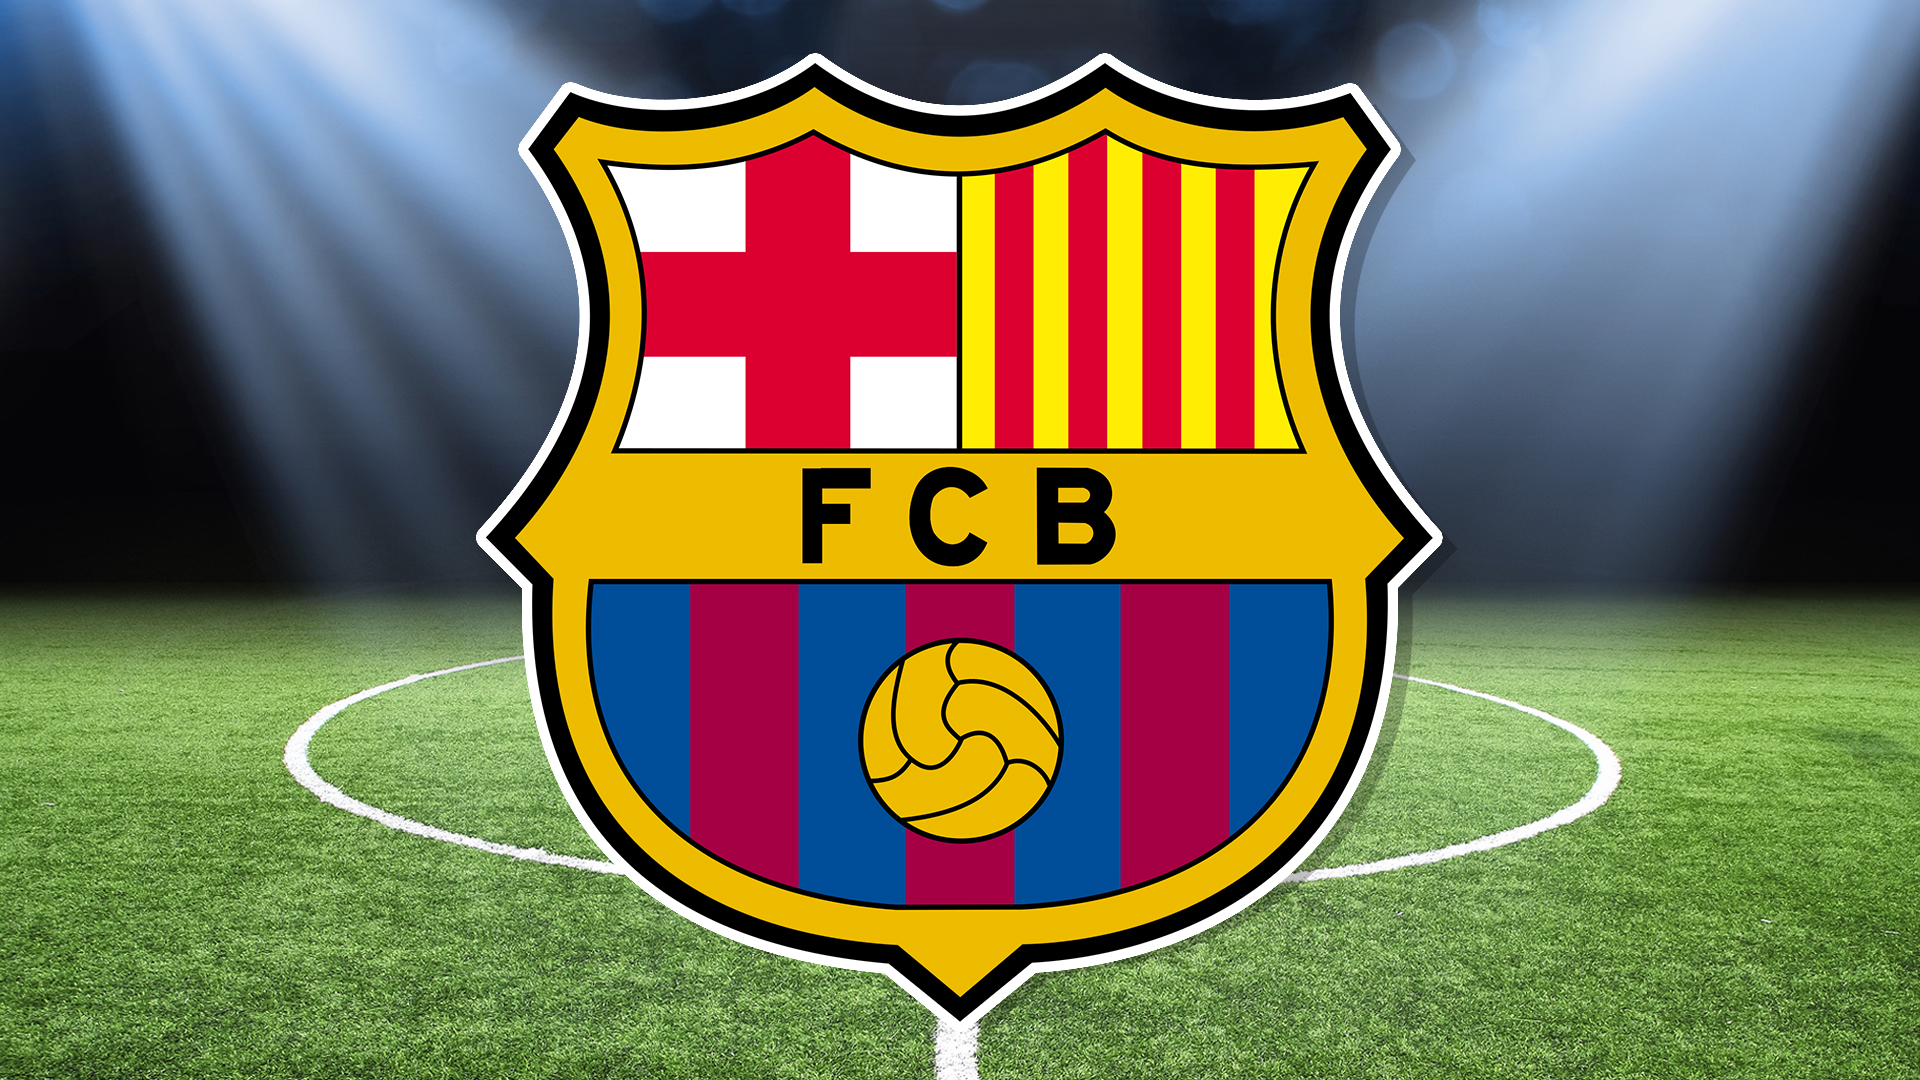 Barcelona's badge